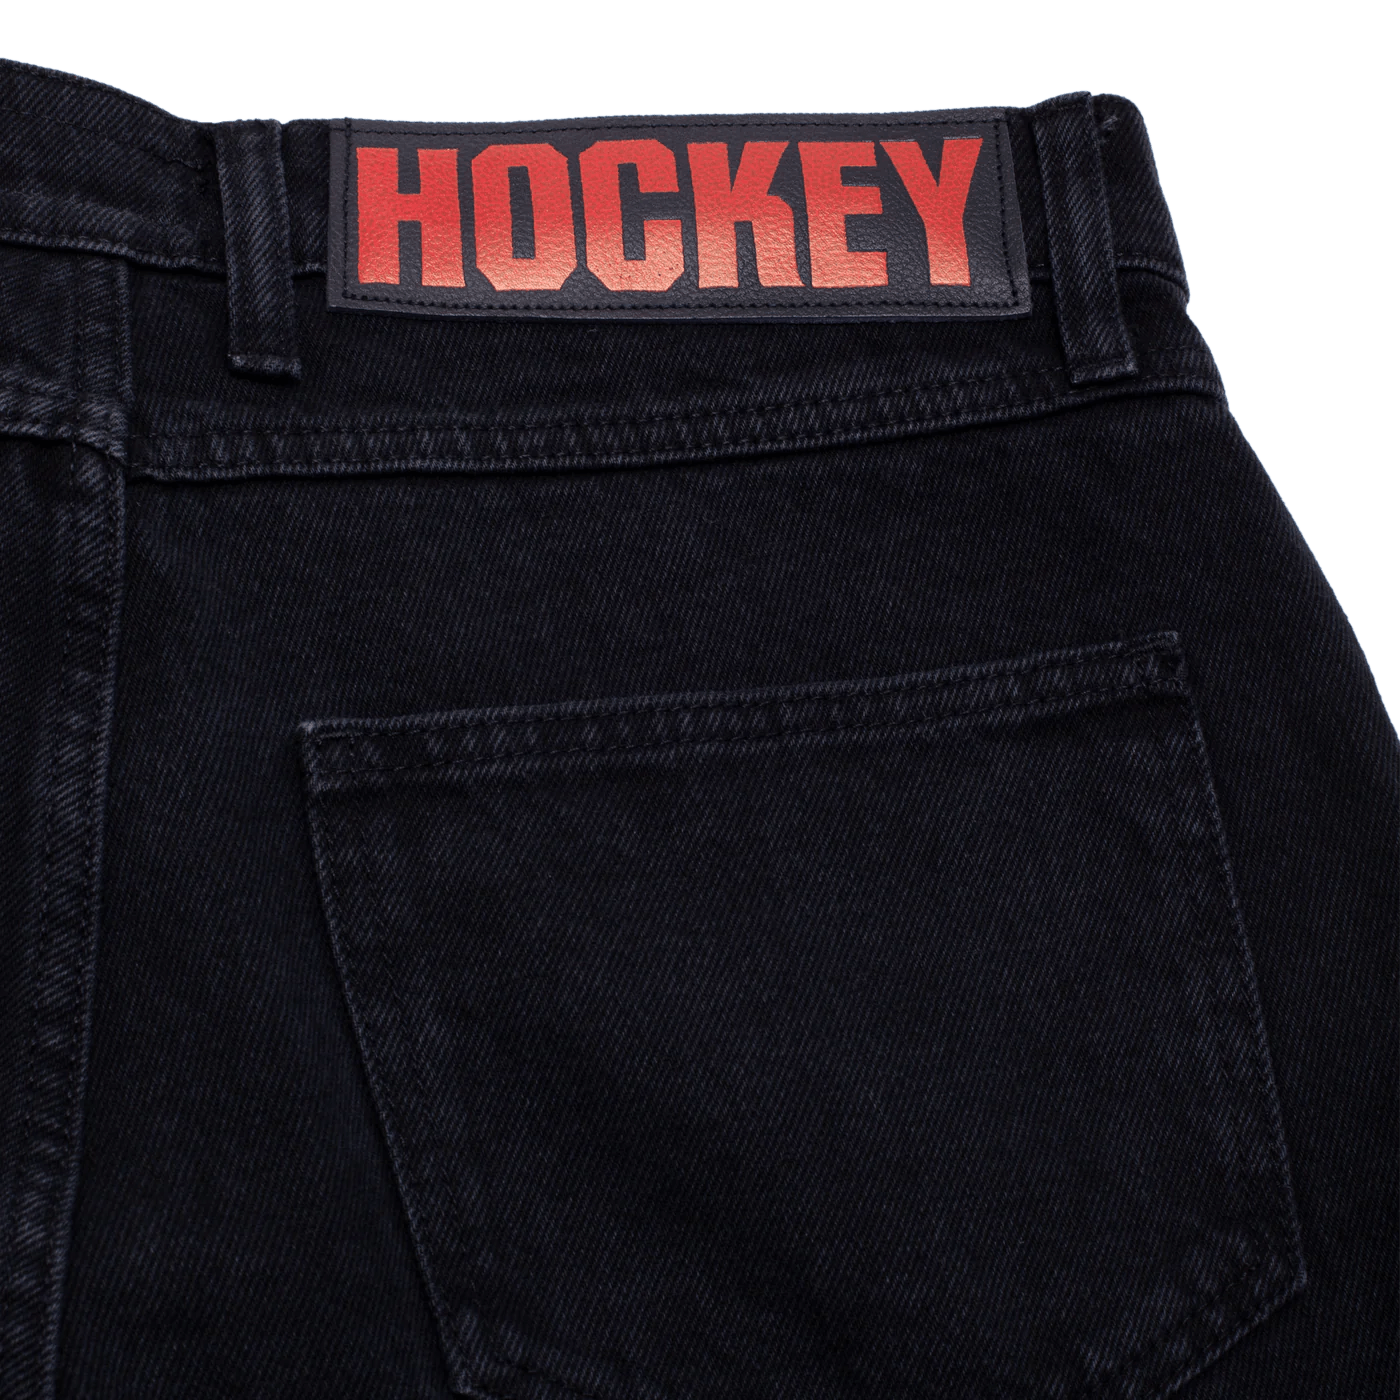 Hockey Standard Jean in Black - Goodnews Skateshop